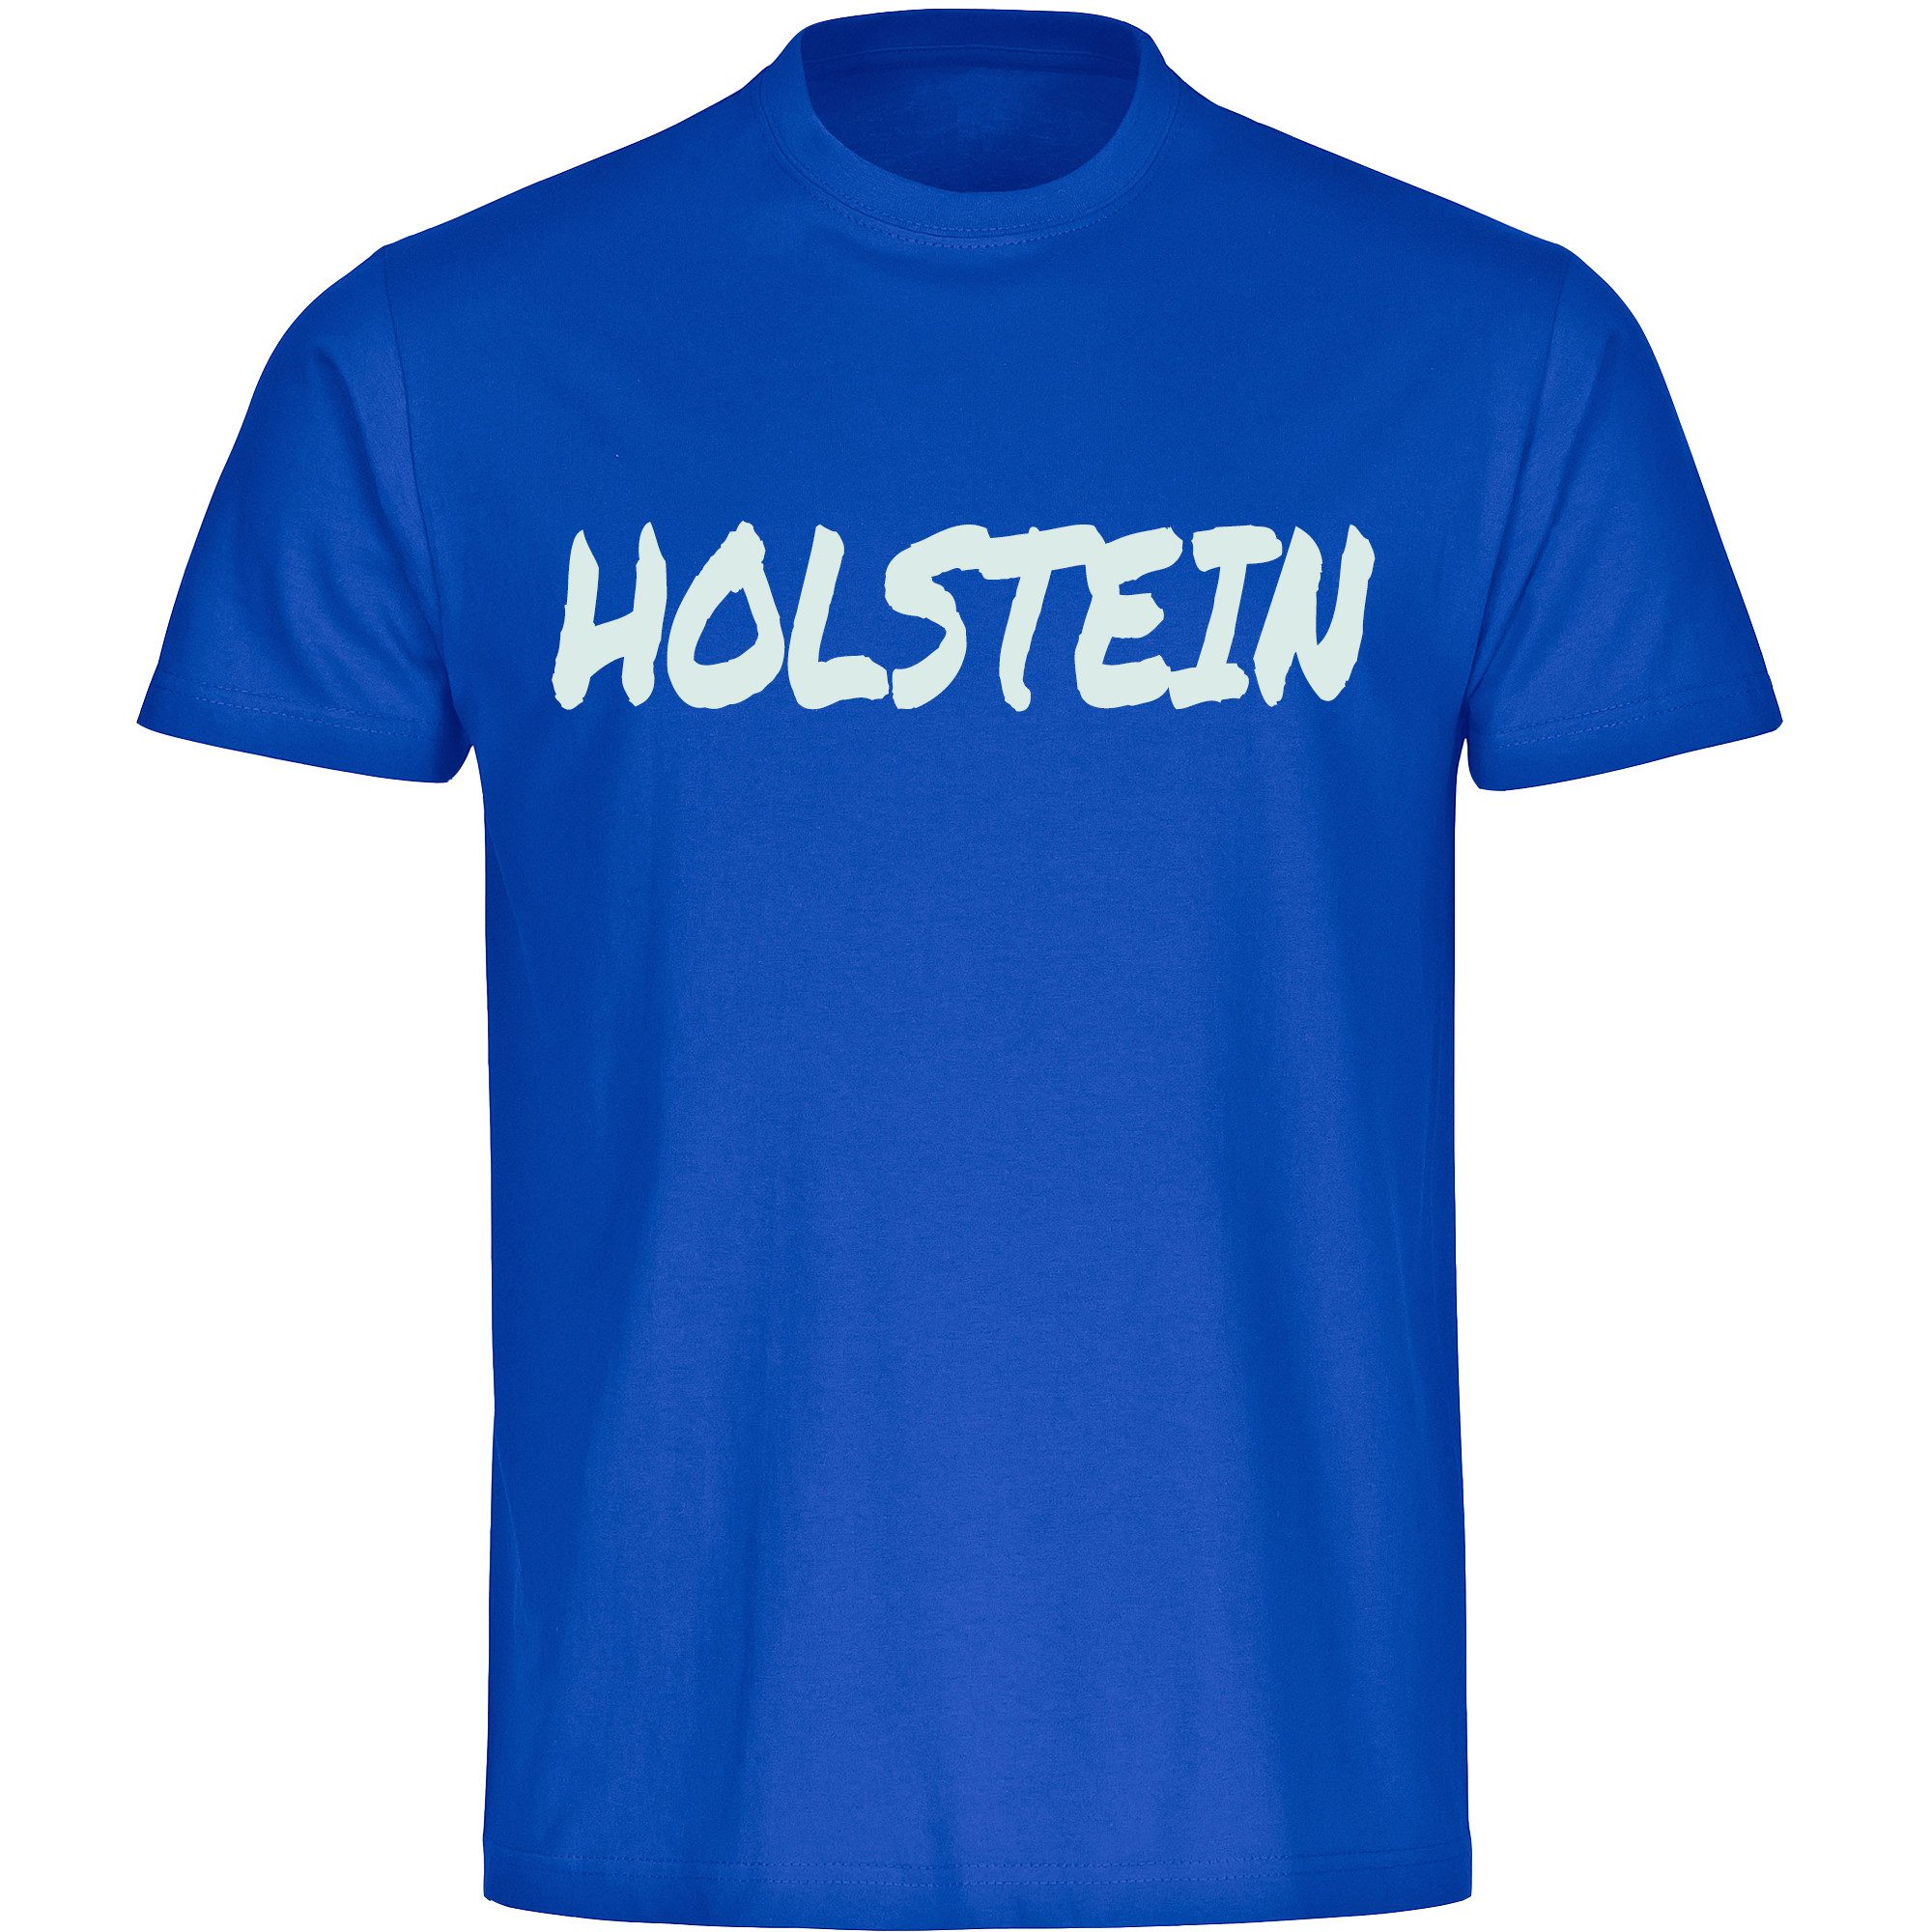 multifanshop T-Shirt Herren Holstein - Textmarker - Männer